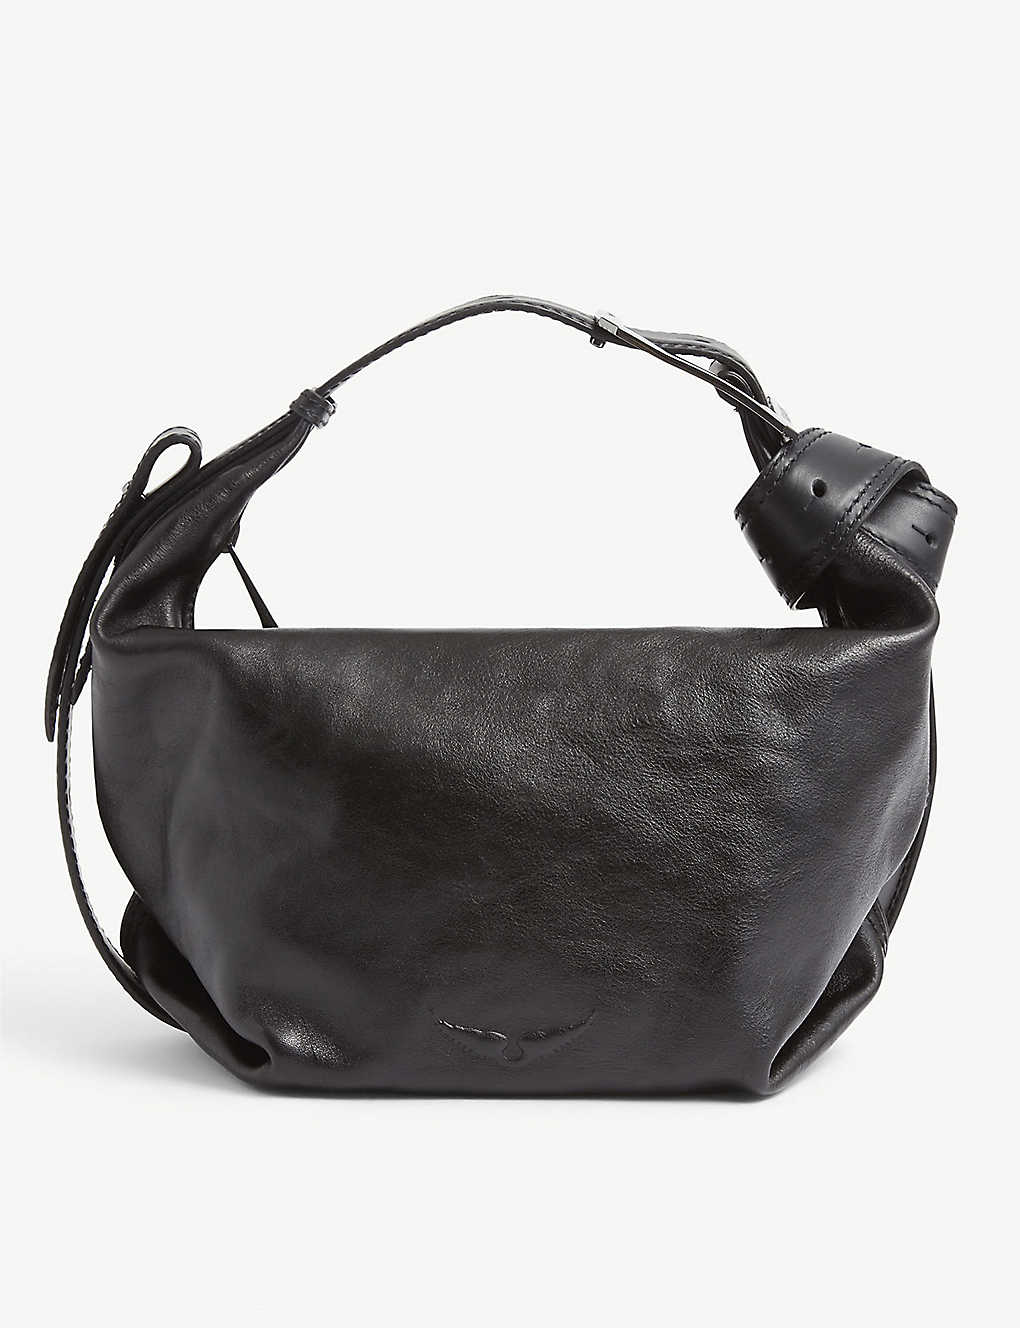 Zadig & Voltaire Le Cecilia Leather Shoulder Bag In Noir